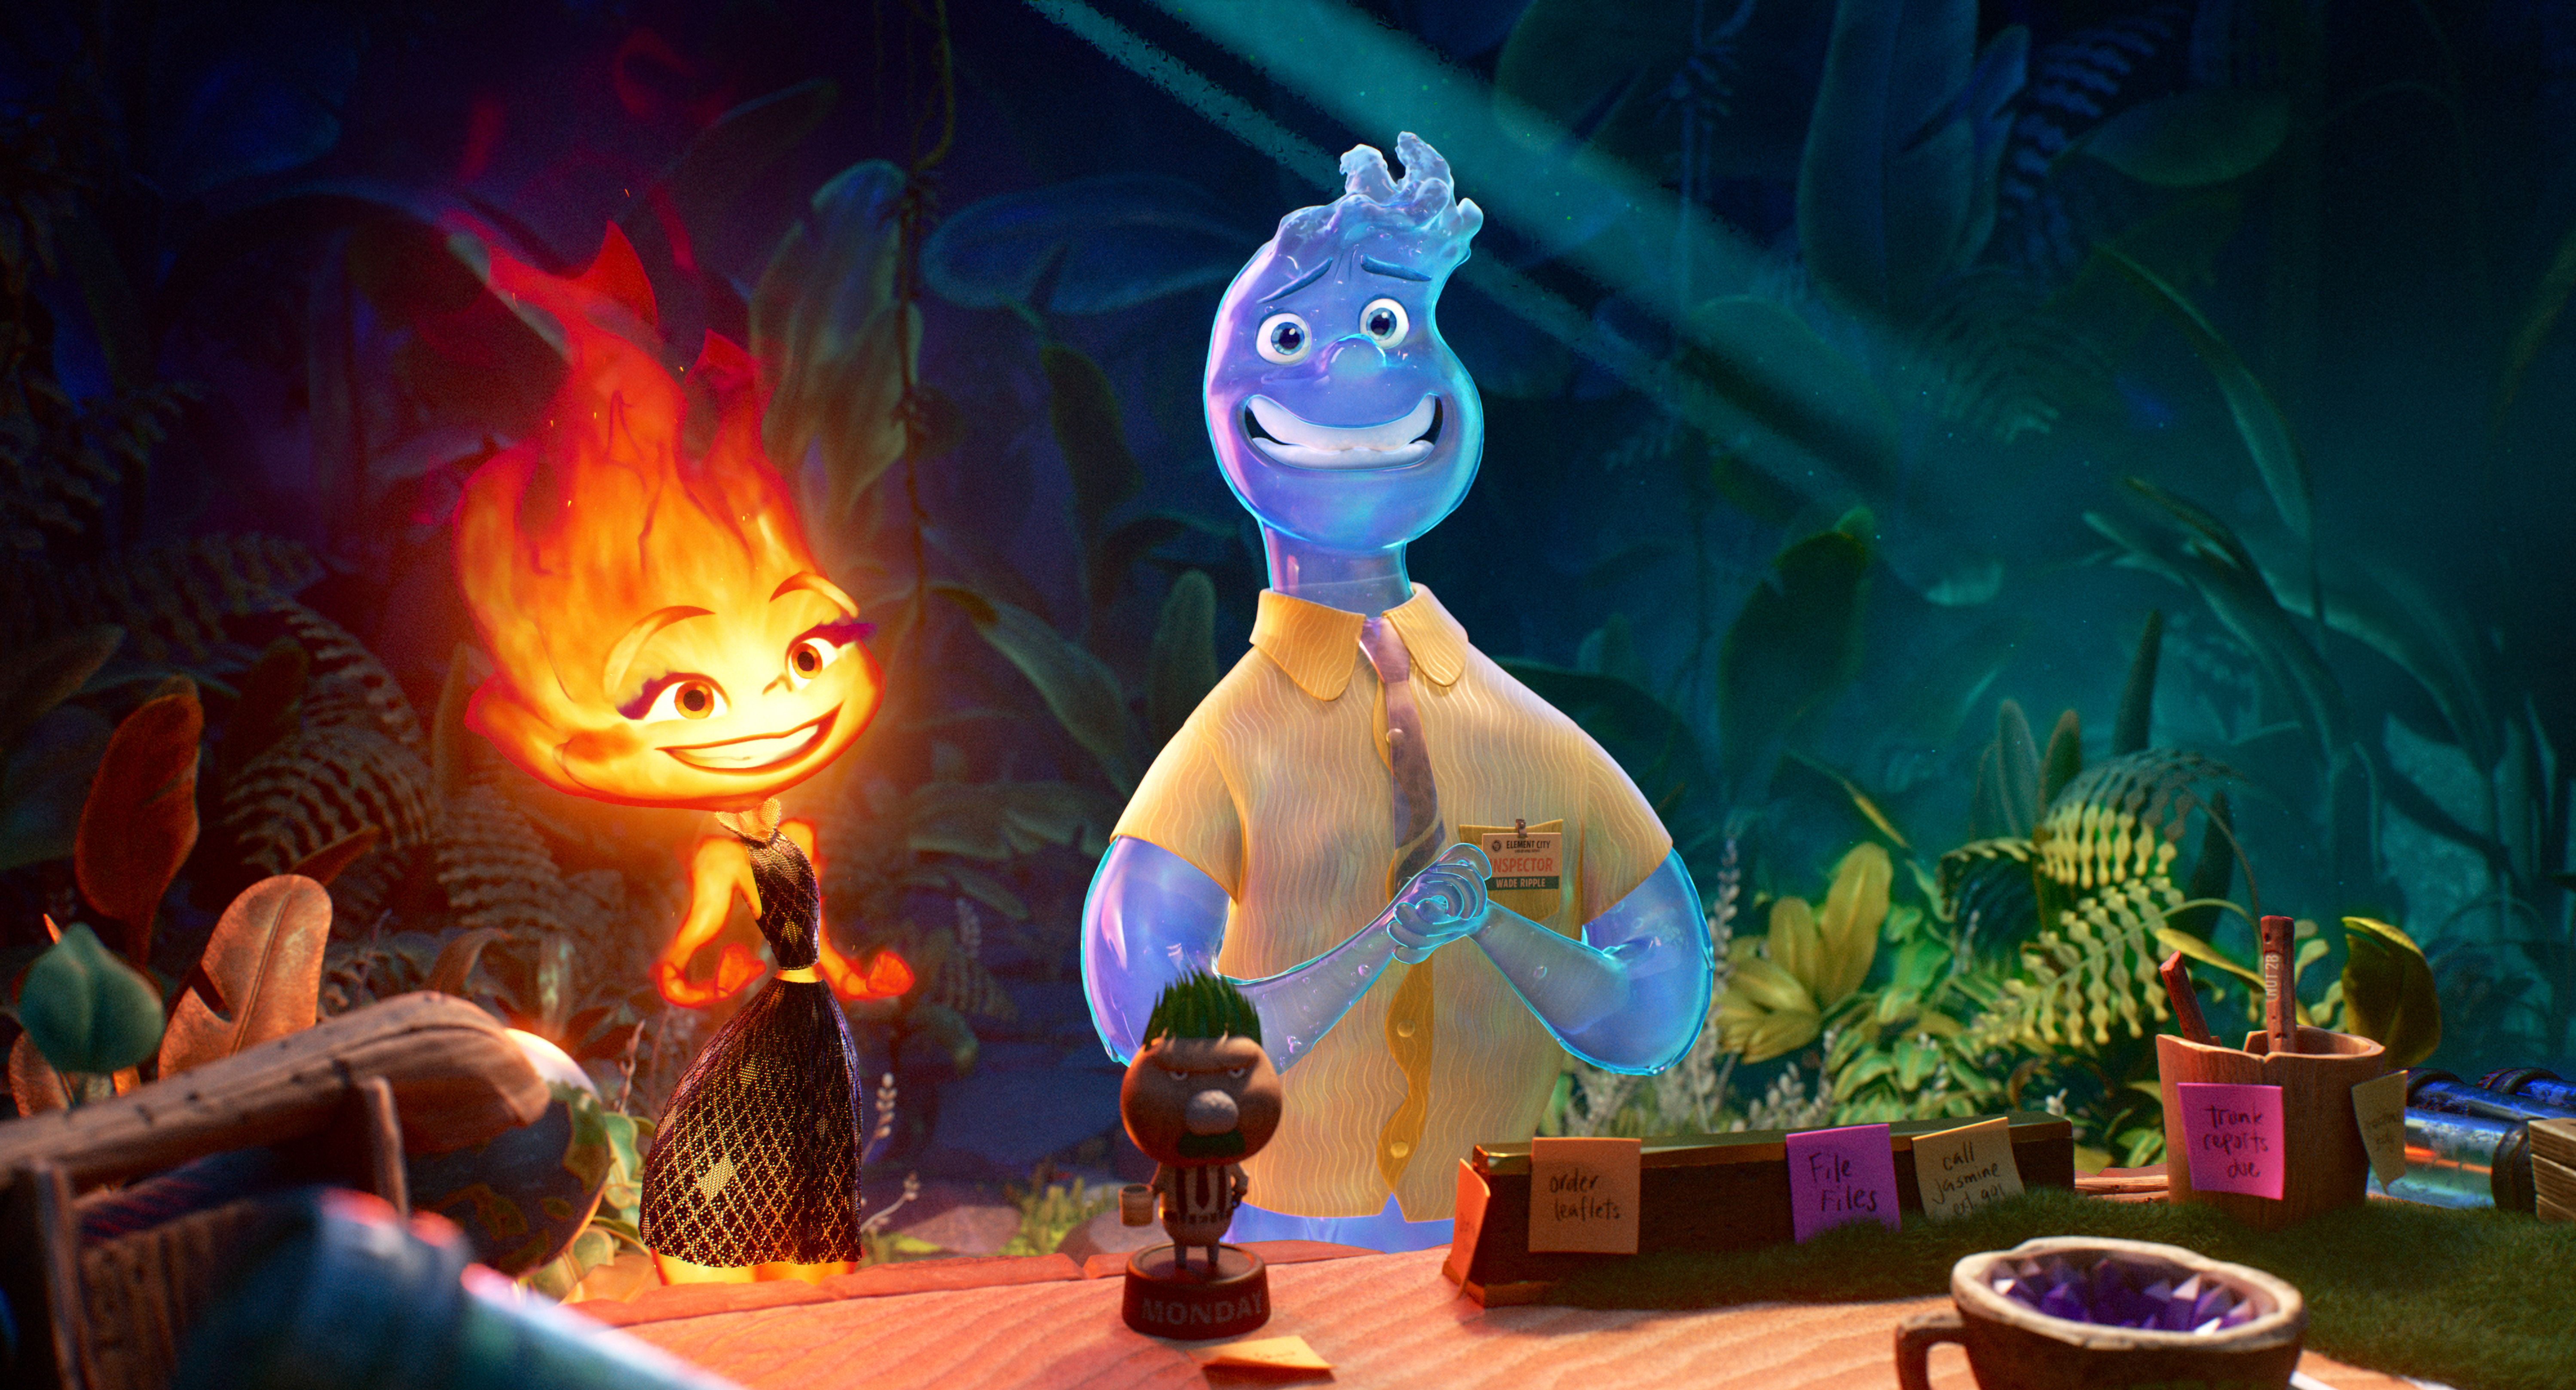 Disney releases first teaser for Pixar's new original movie Elemental